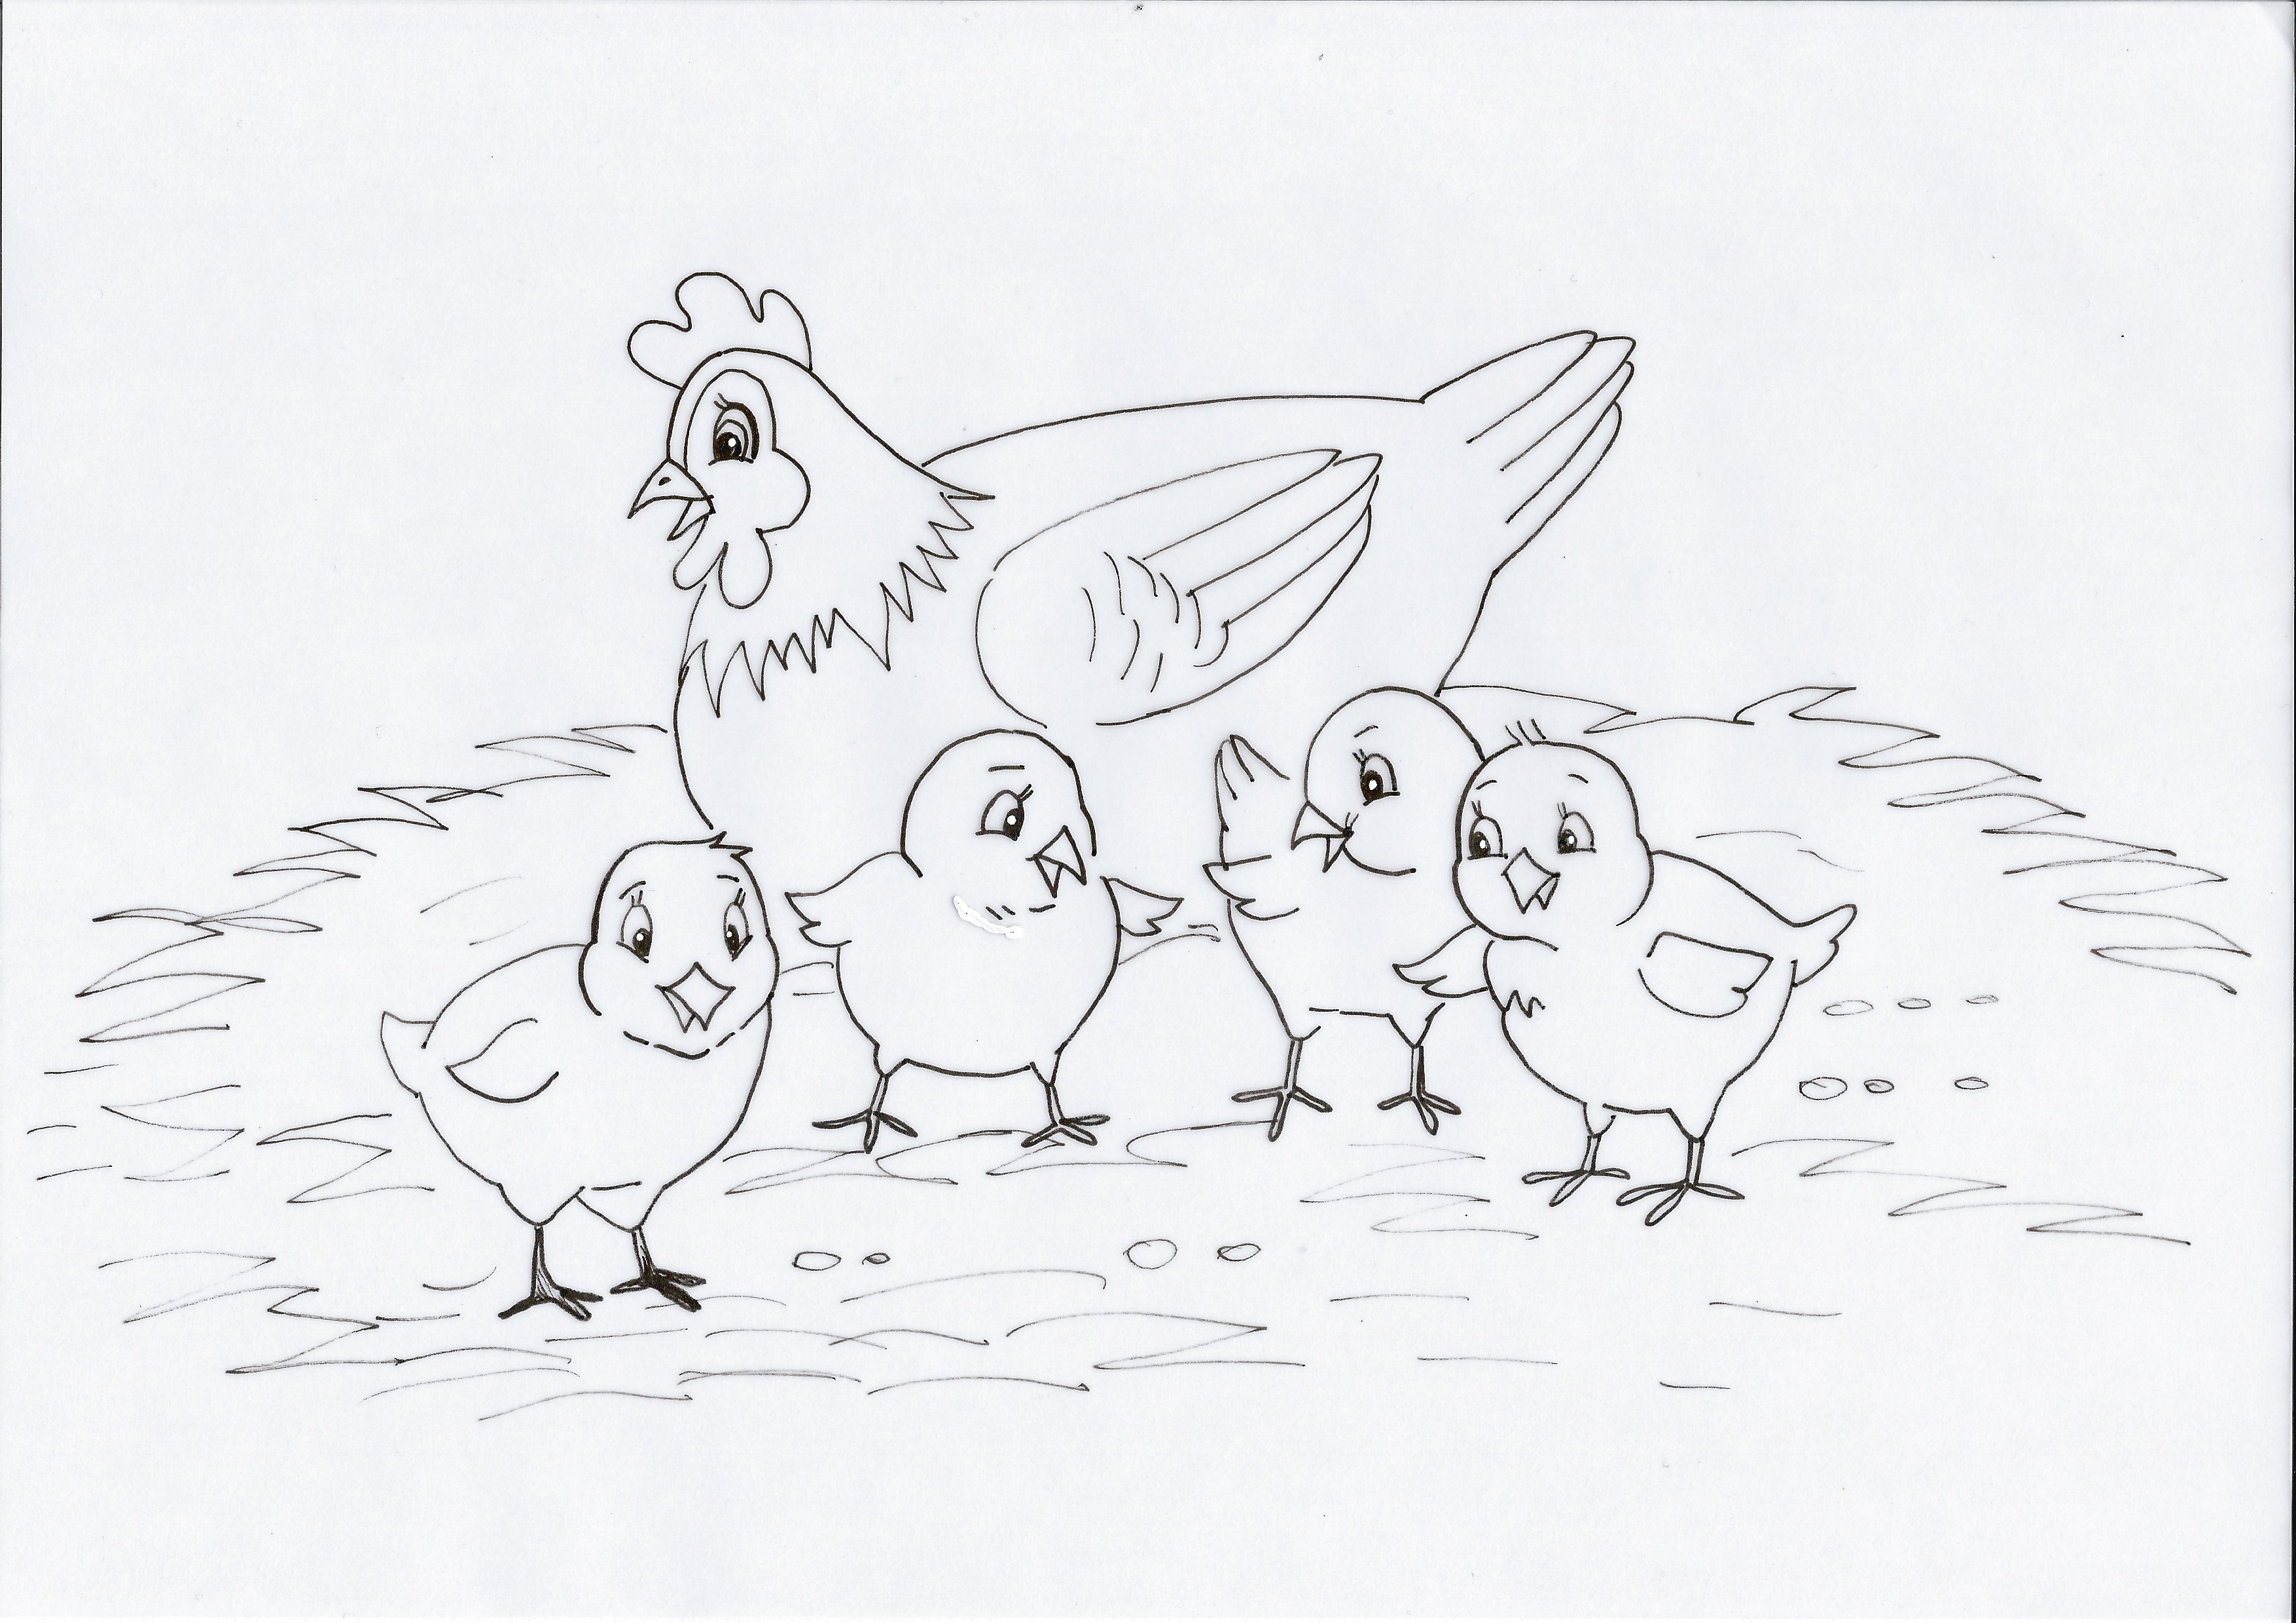 Курица с цыпленком раскраска для малышей